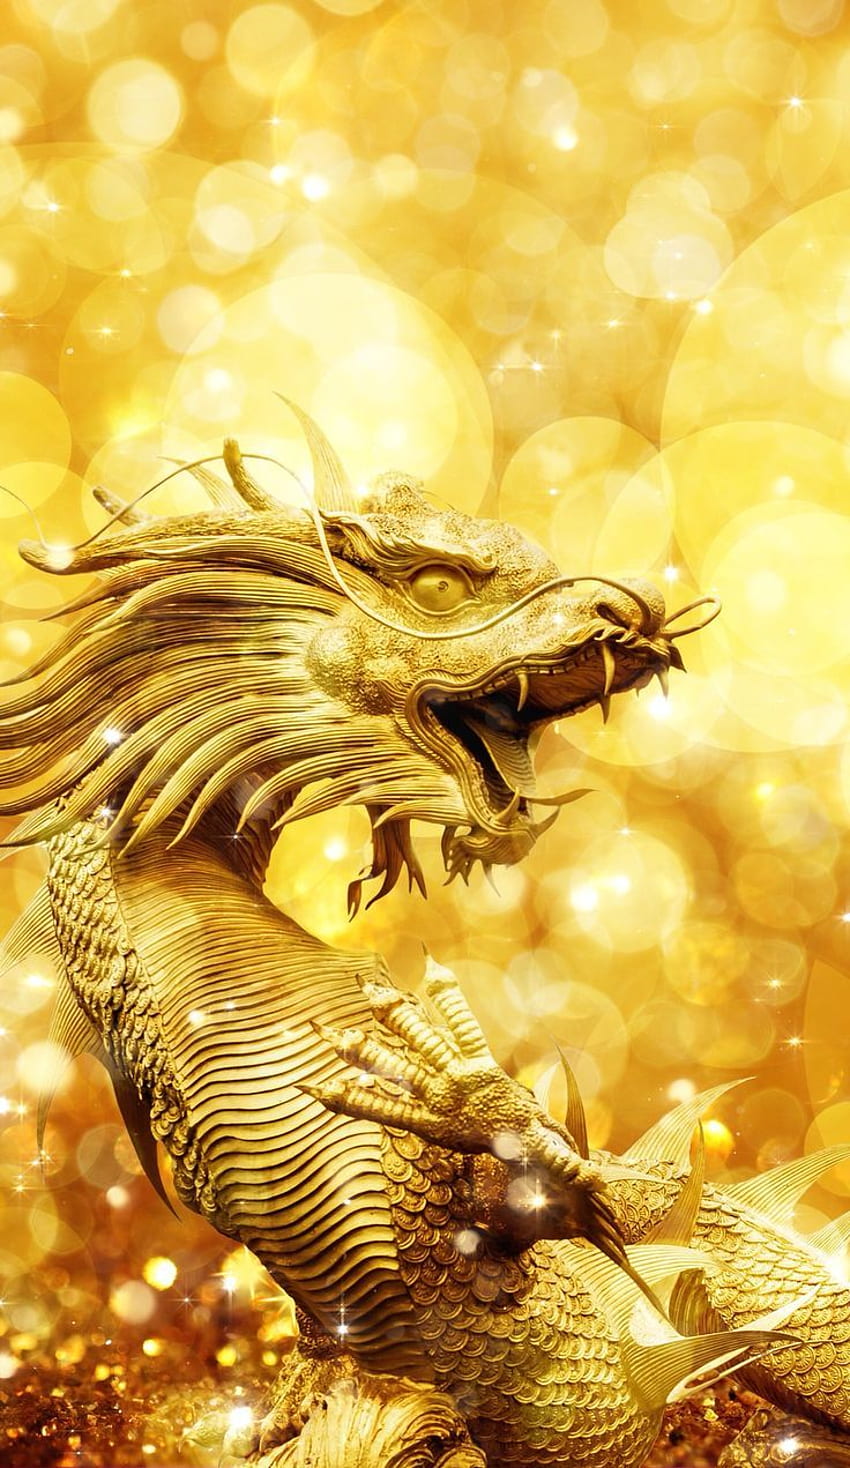 2327 Chinese Dragon Wallpapers | Gold dragon wallpaper, Gold dragon, Dragon  images